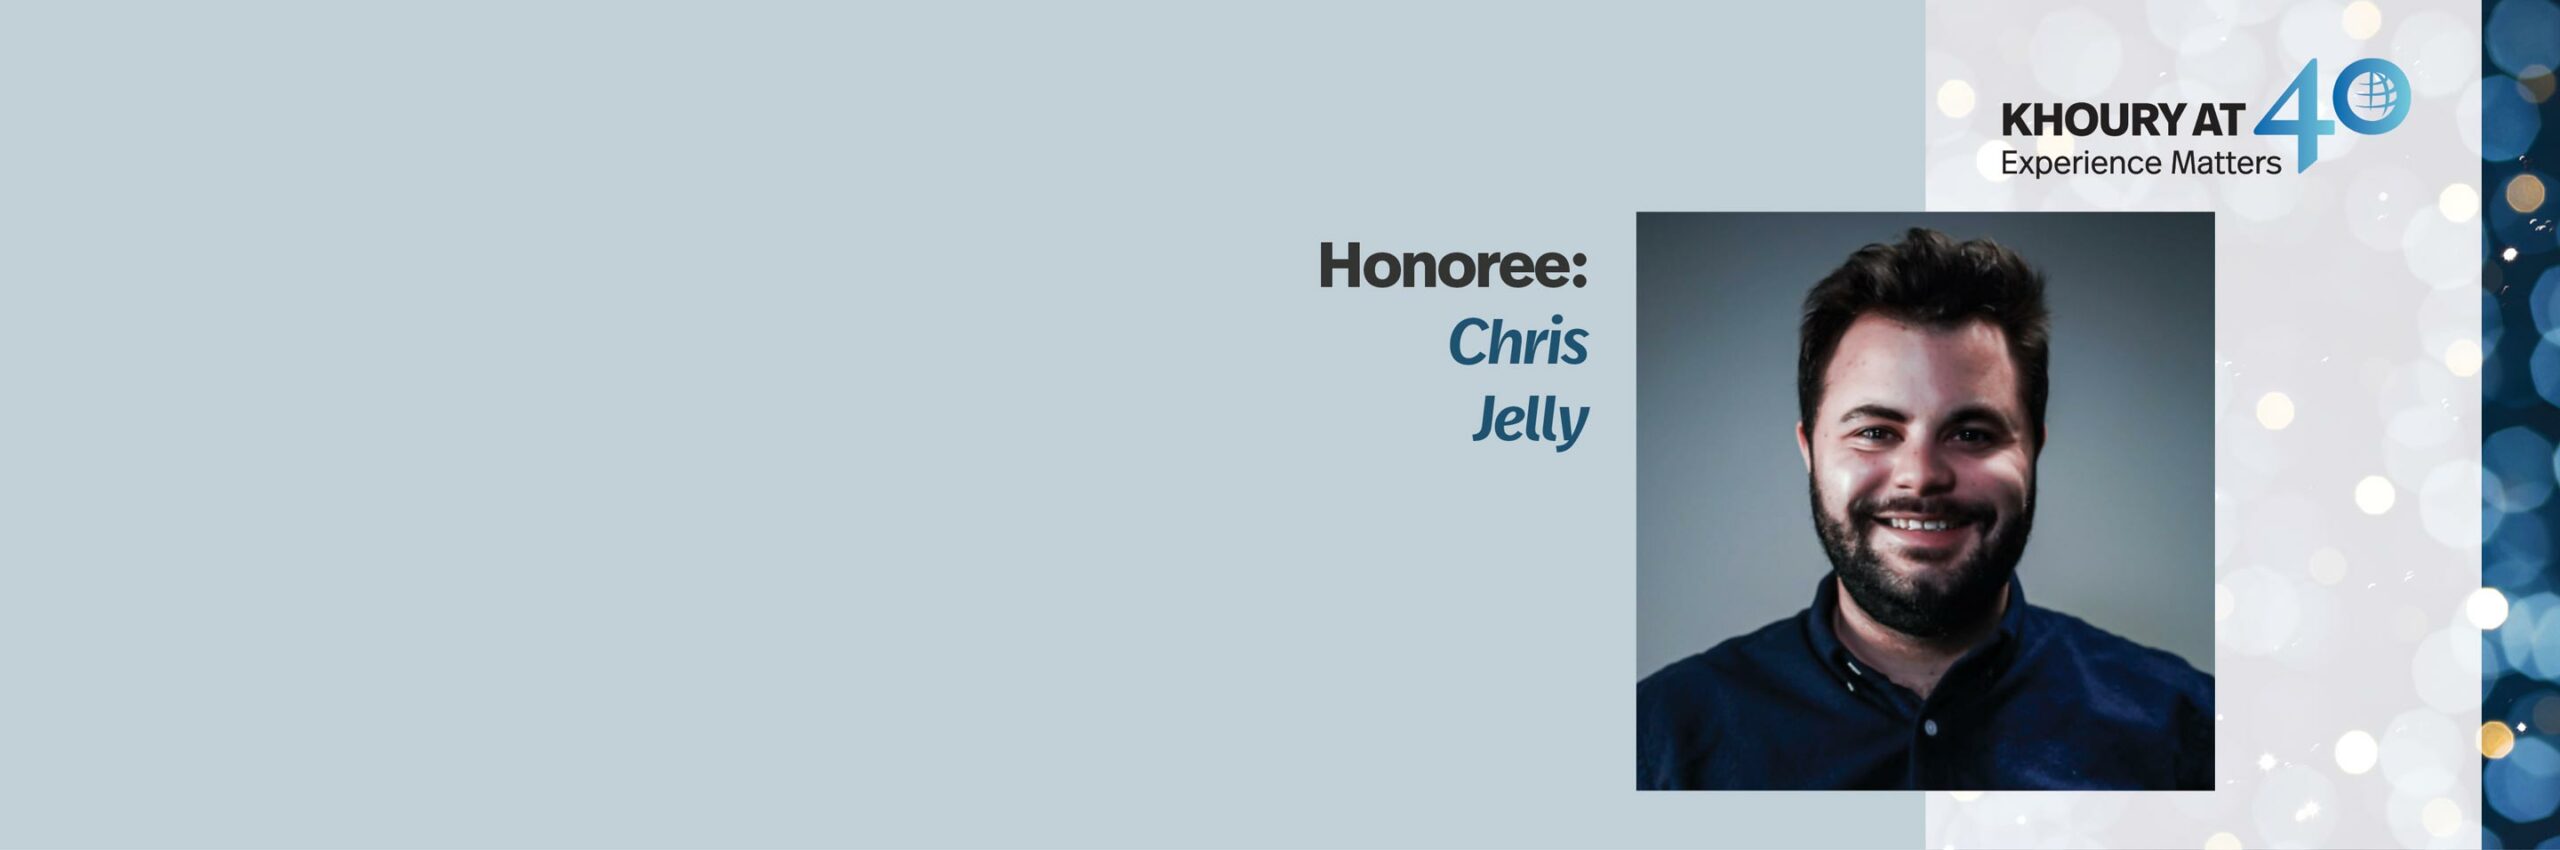 Chris Jelly